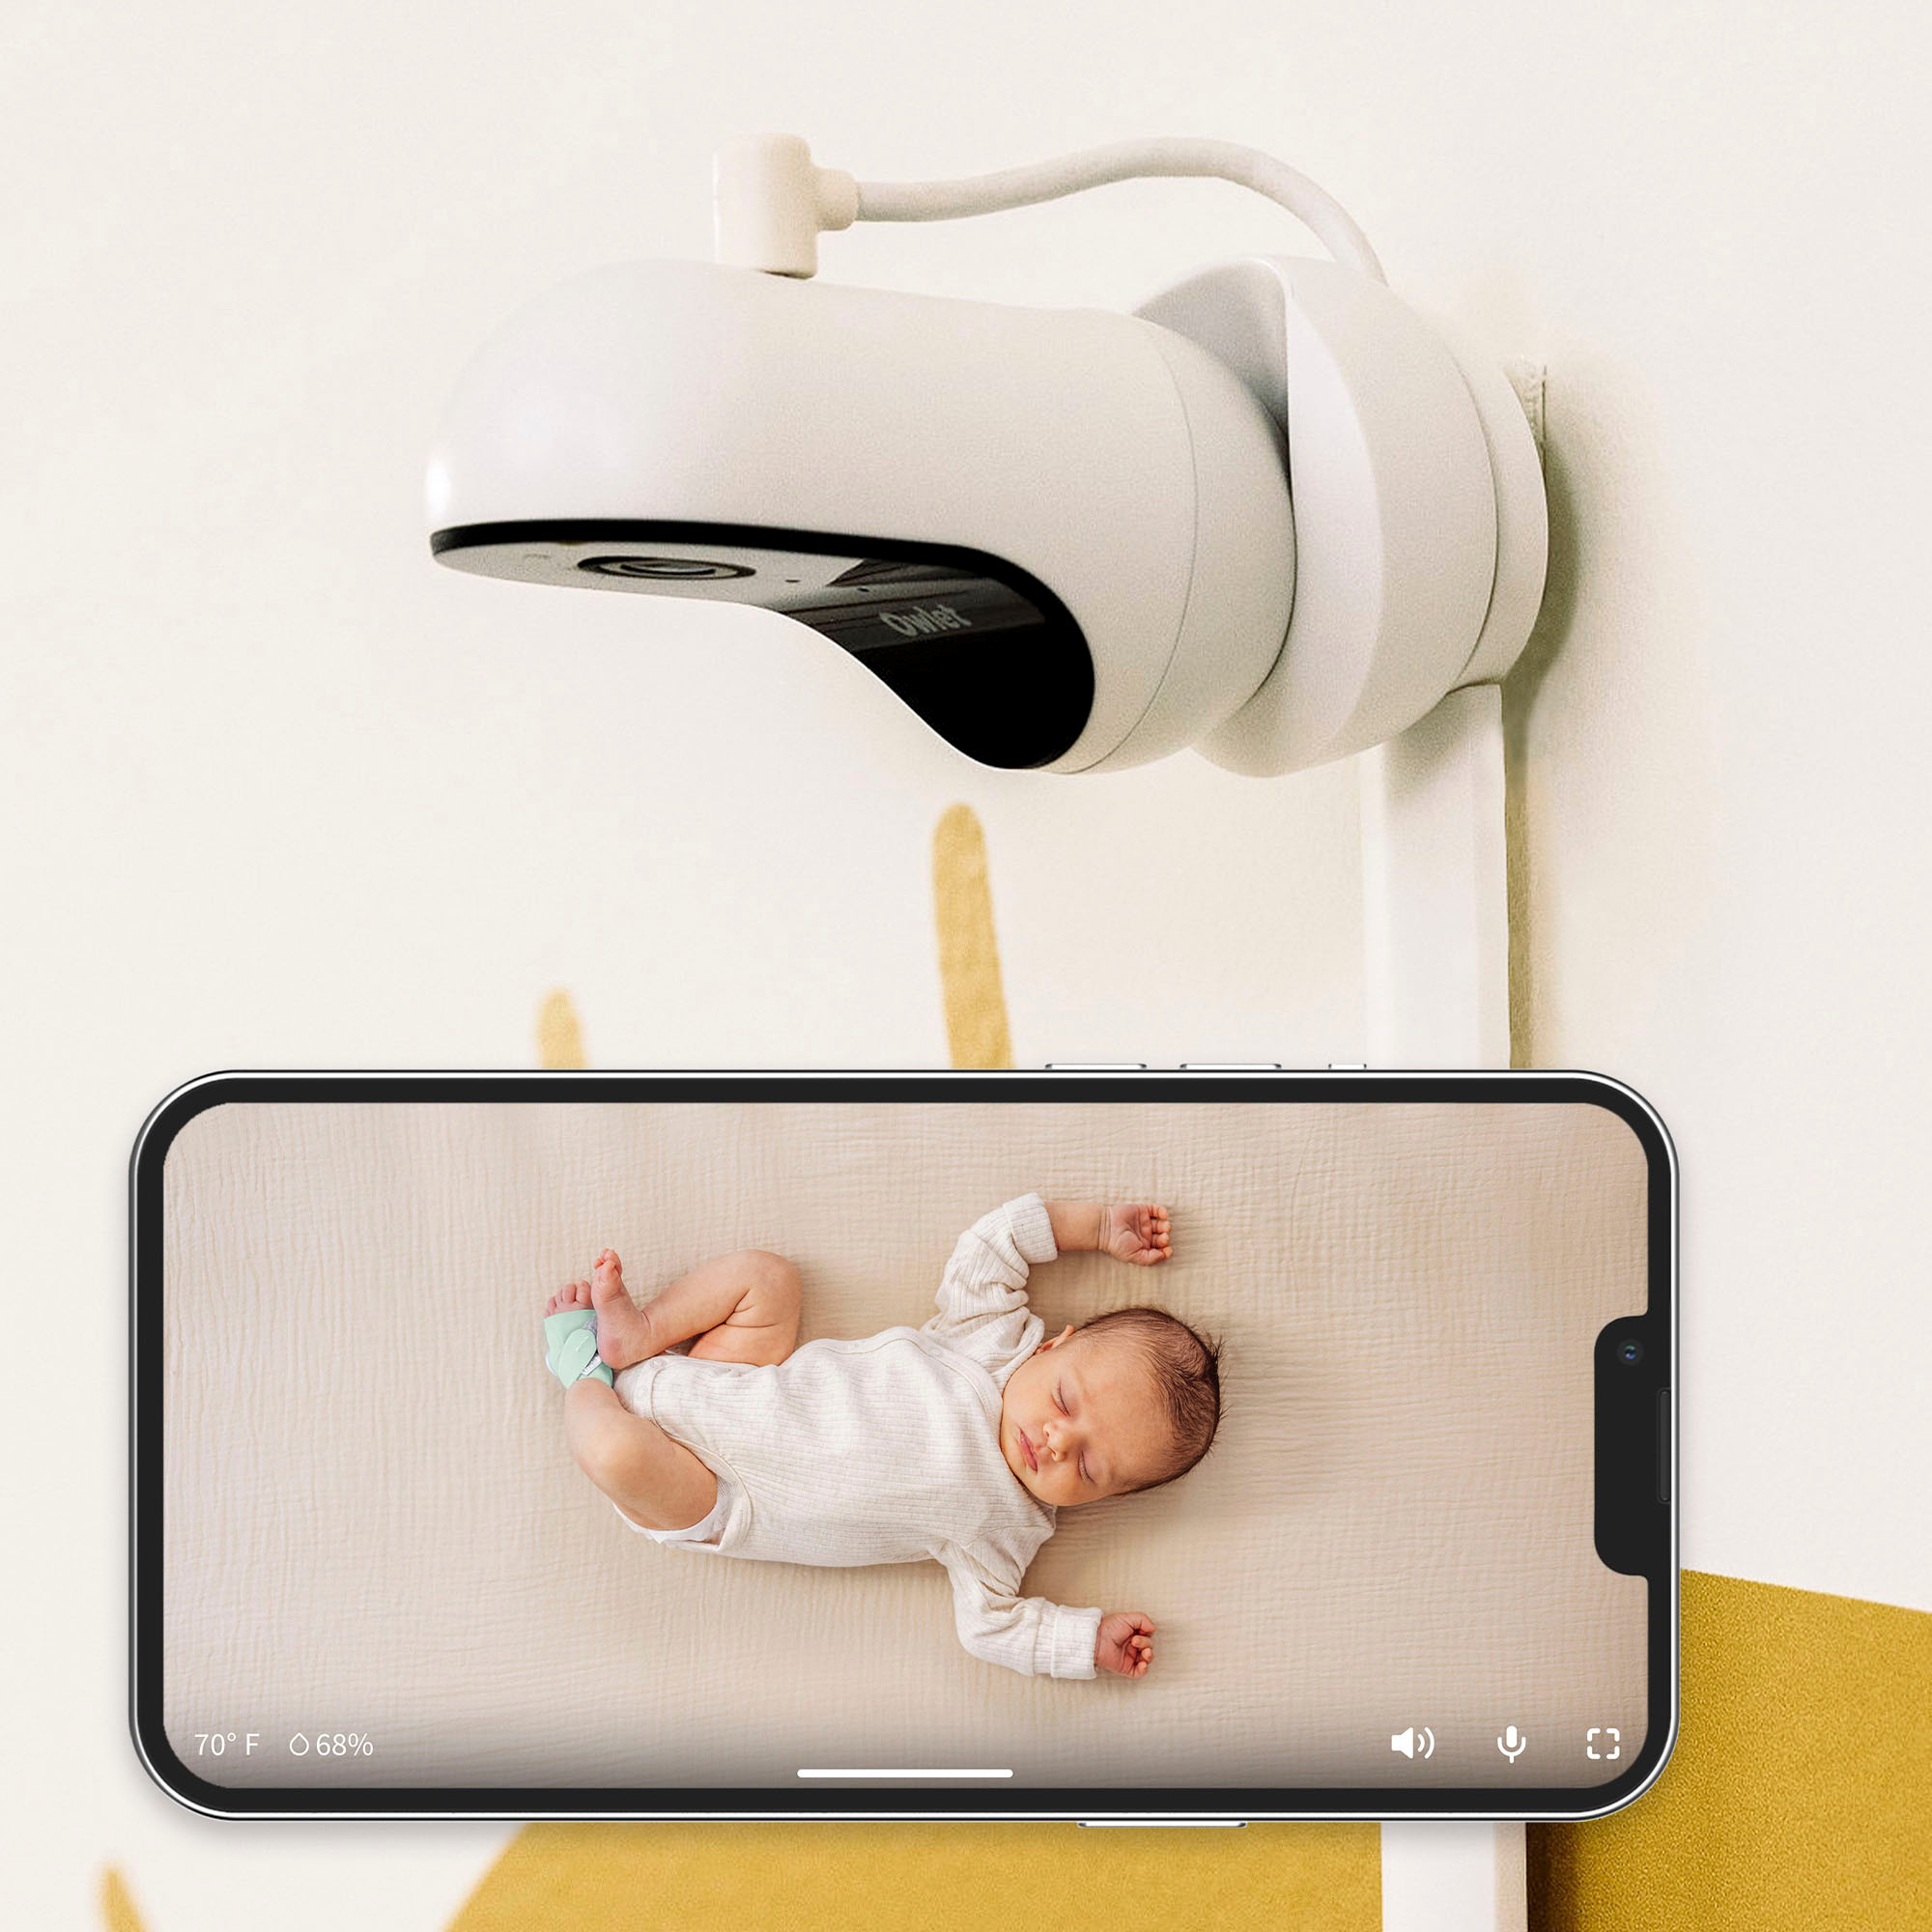 Buy Owlet Cam Smart HD Video Baby Monitor - Single Cam online